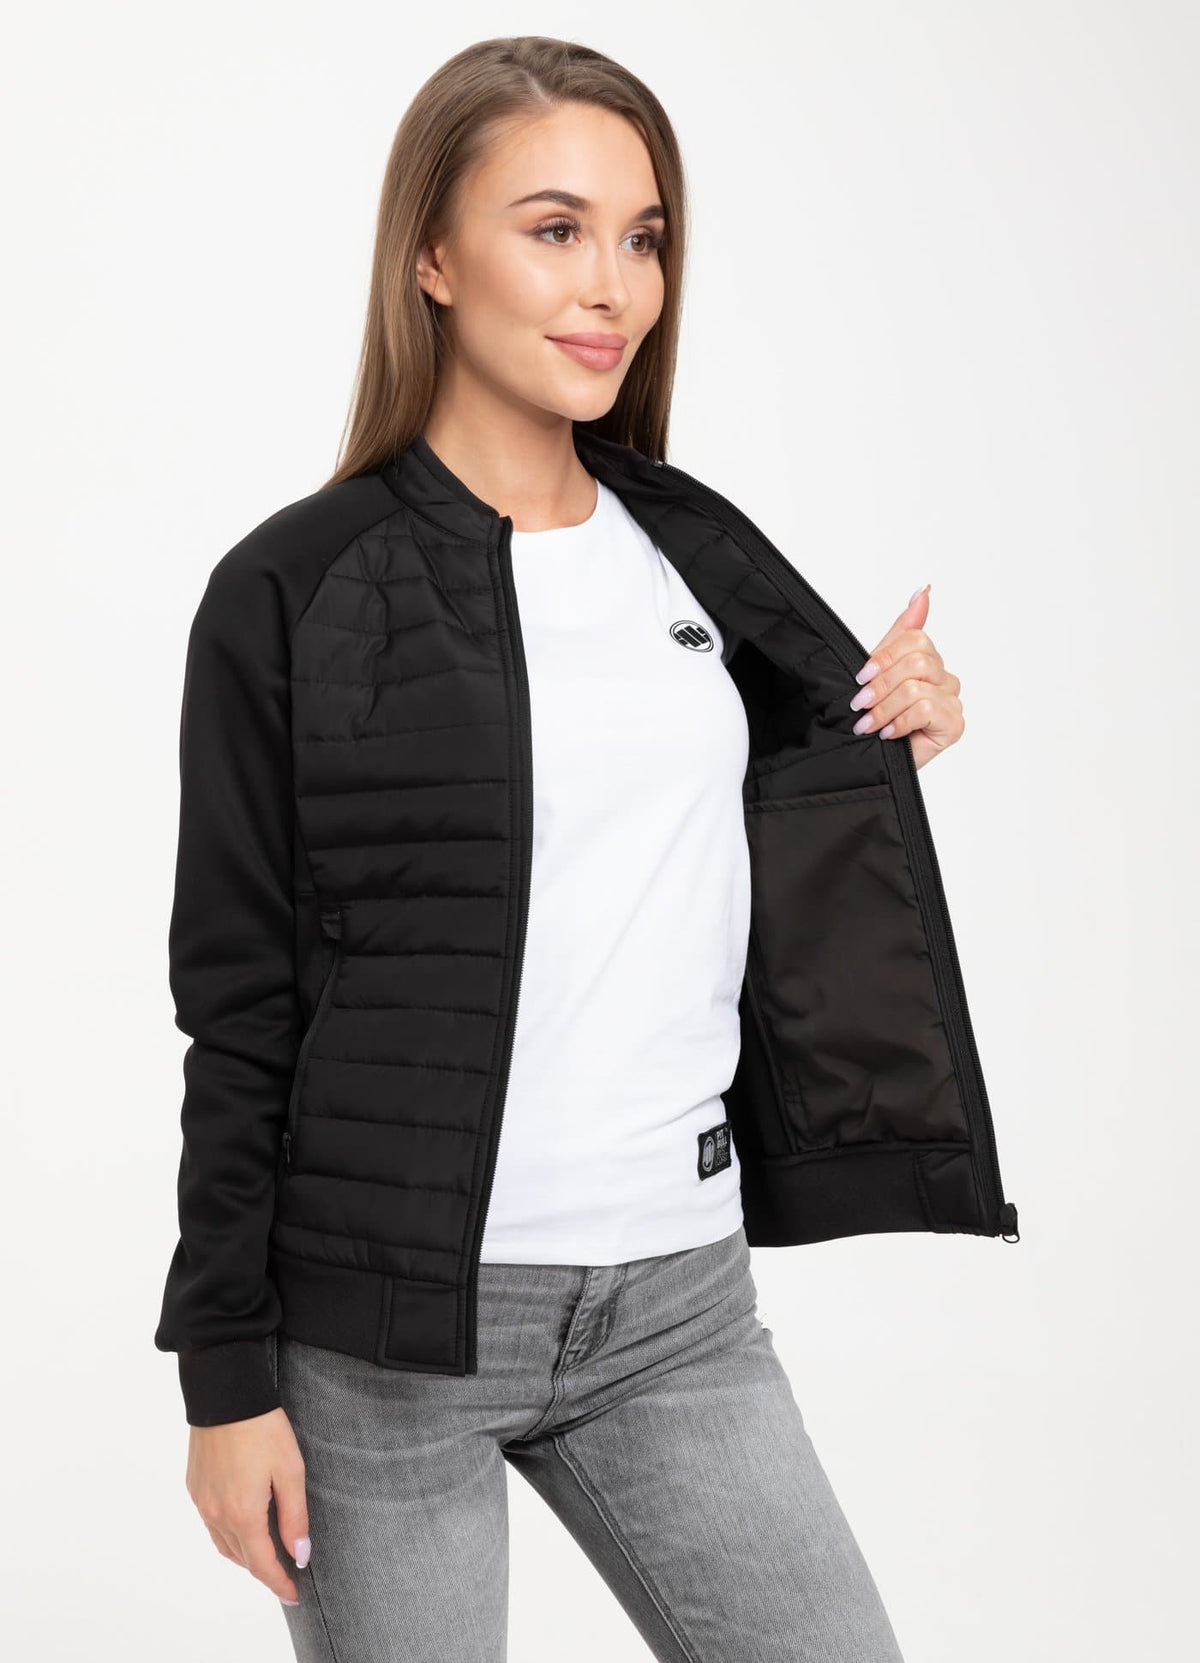 Women Jacket PACIFIC Black - Pitbull West Coast International Store 